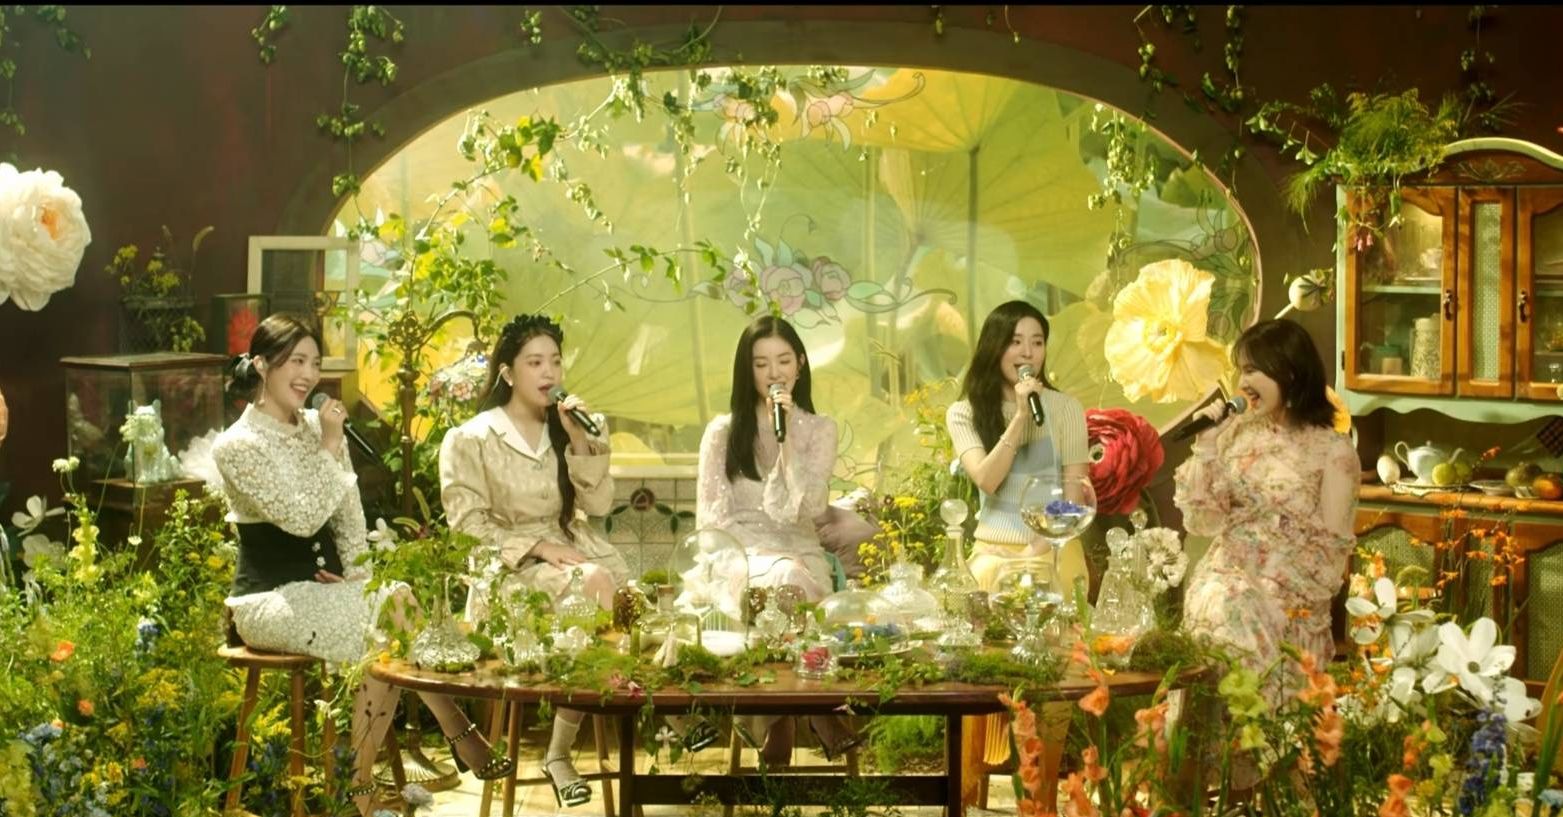 SM Town telah merilis video musik cover Red Velvet di kanal YouTube SMTOWN pada Jumat, 21 Agustus 2020.